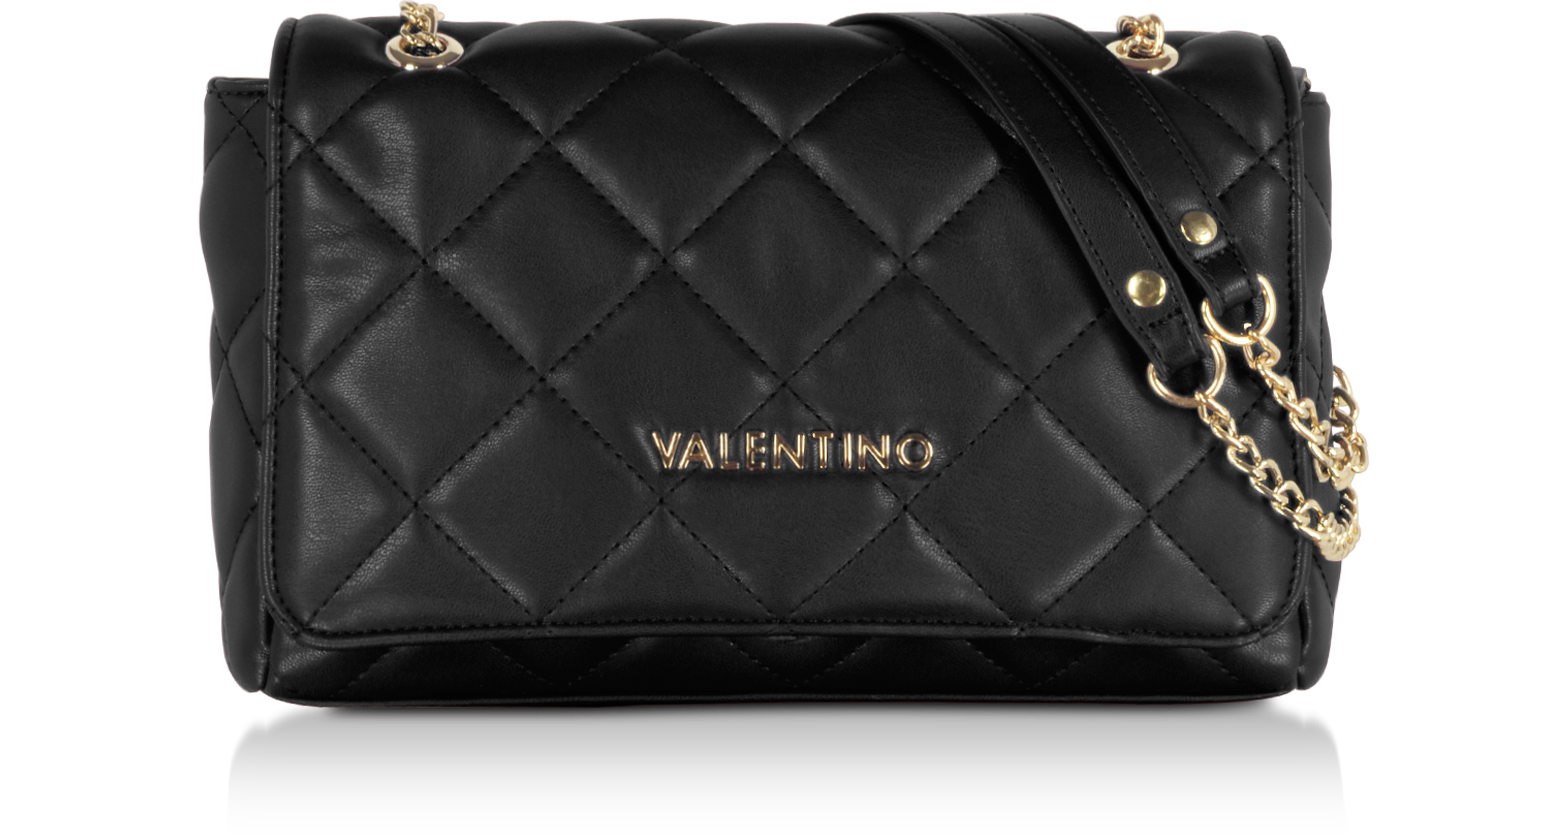 Valentino by Valentino Black Shoulder Bag at